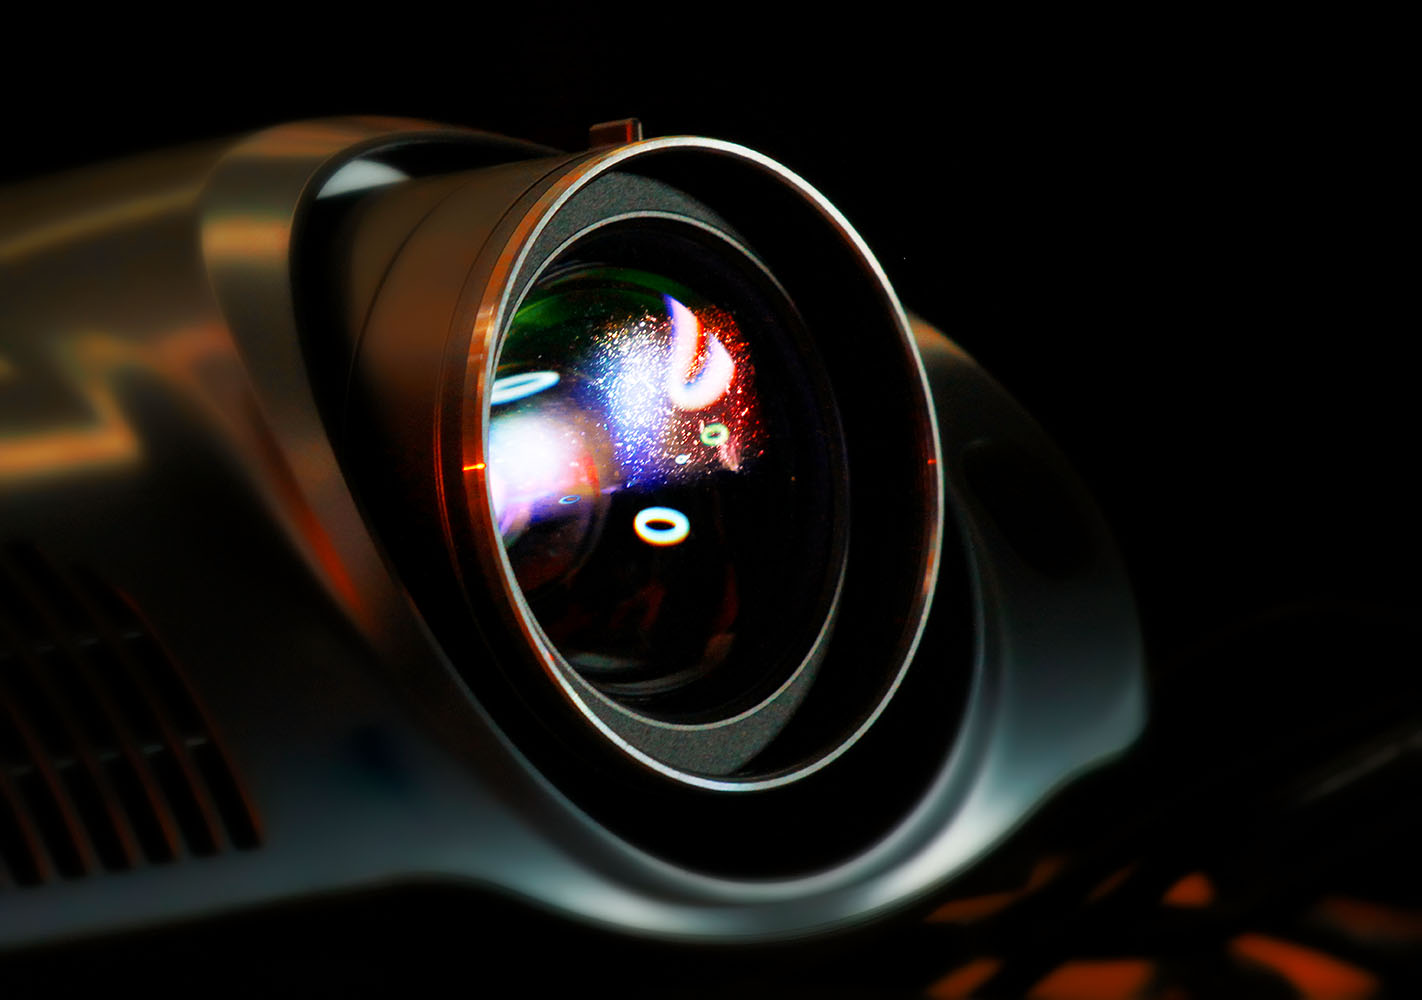 Projector lens